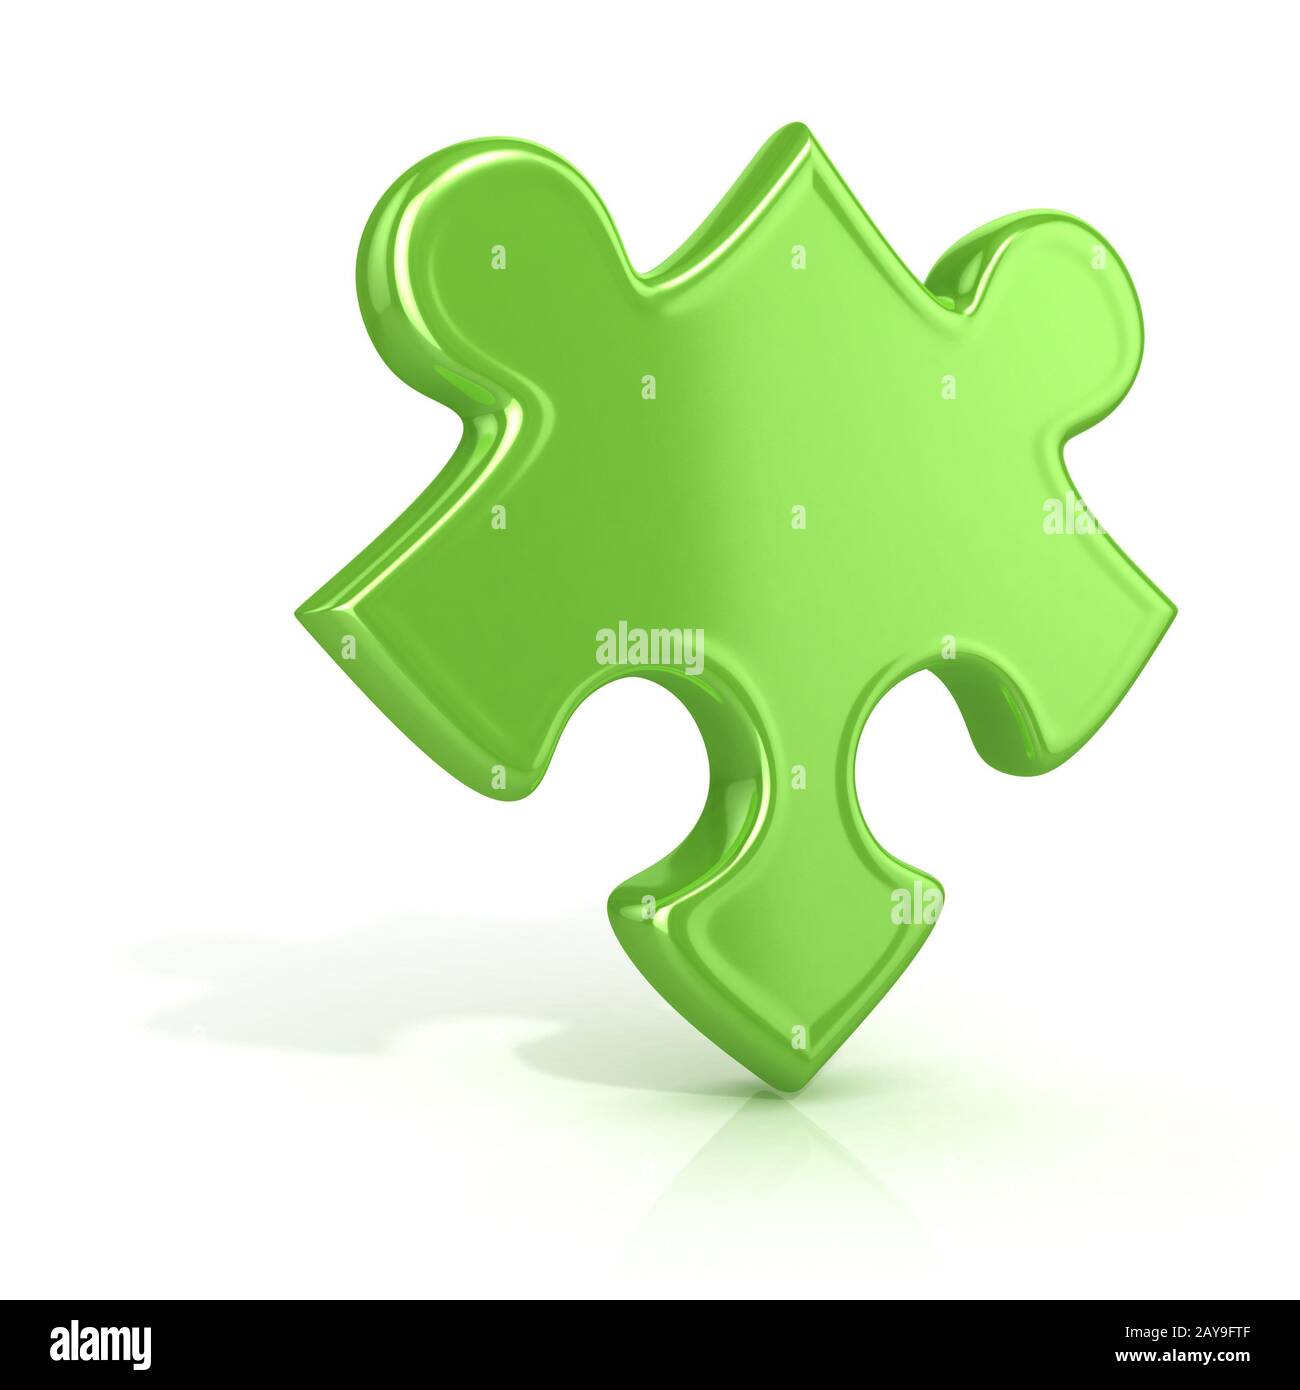 Single, green, standing jigsaw puzzle piece. 3D Stock Photo - Alamy